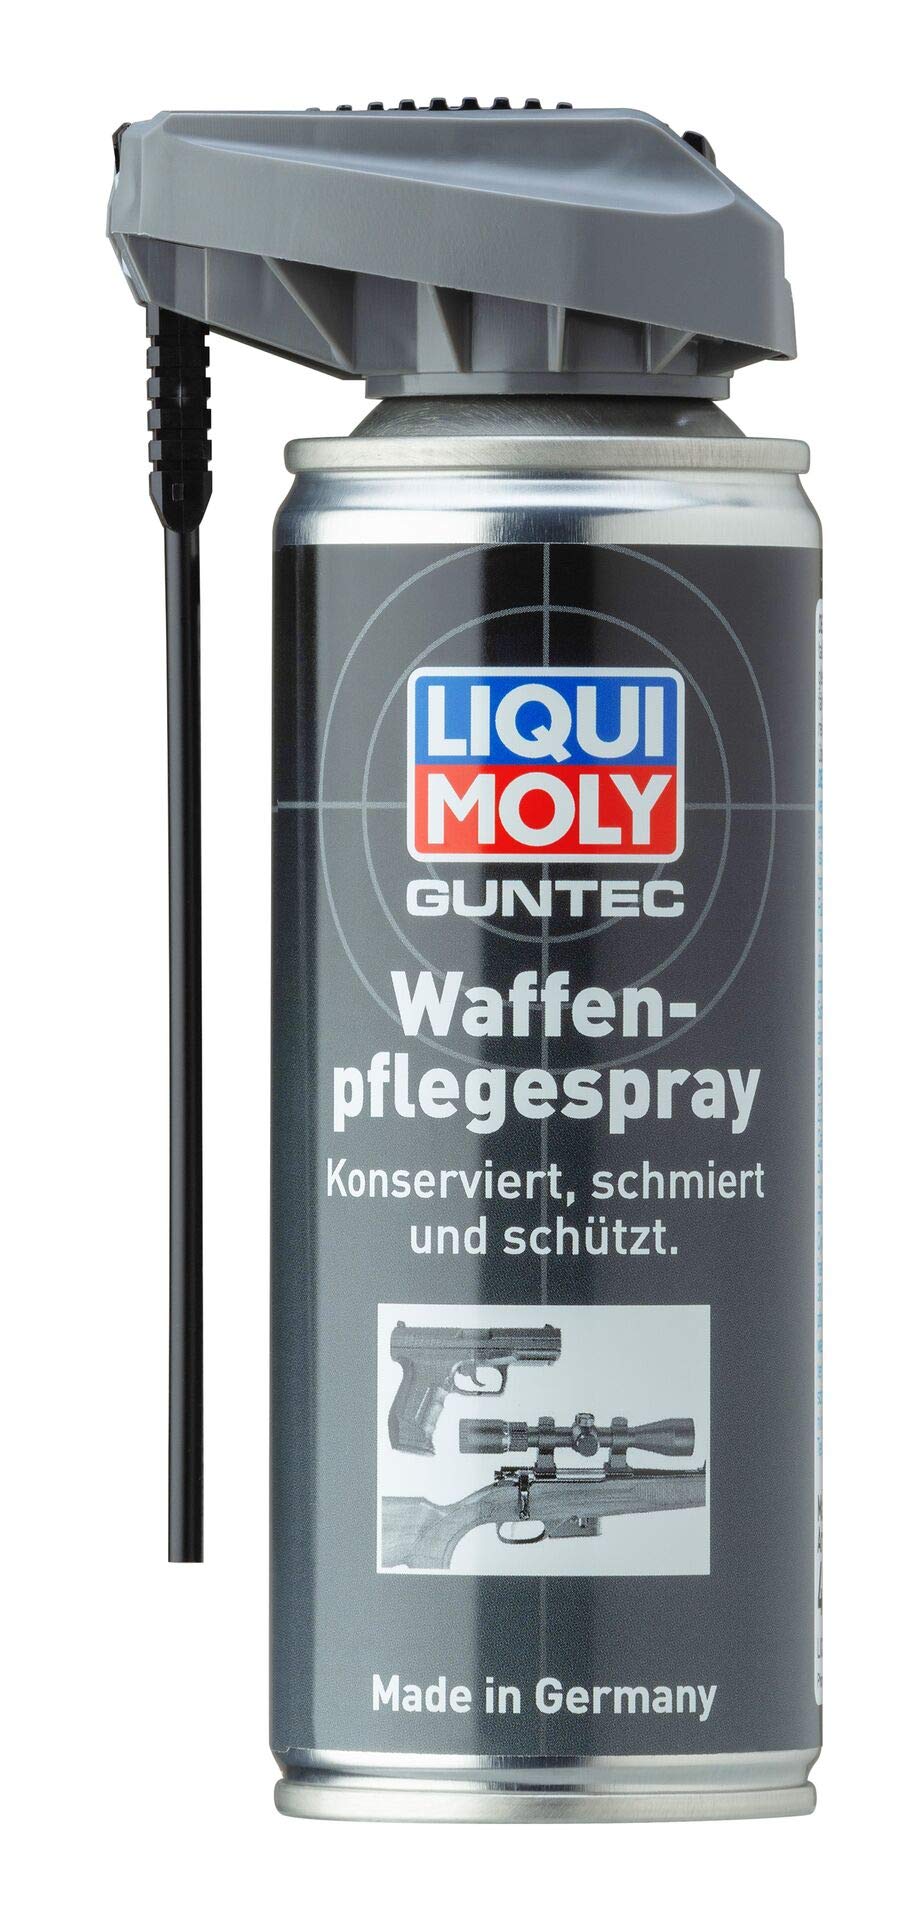 LIQUI MOLY GUNTEC Waffenpflegespray | 200 ml | Waffenpflege | Gleitlack | Gleitöl | Art.-Nr.: 4390 von Liqui Moly